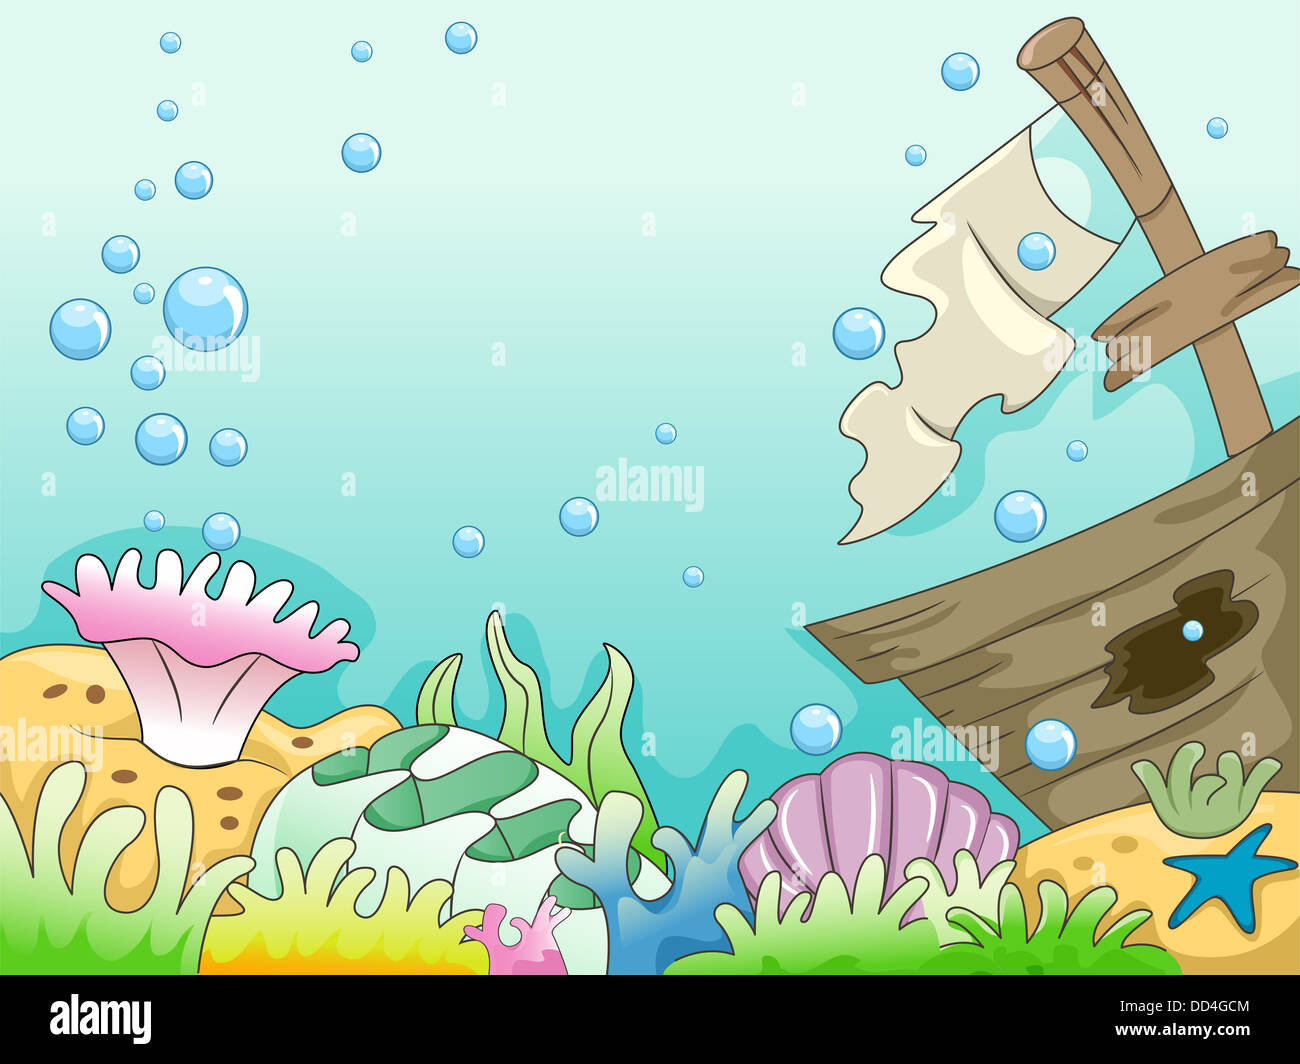 Illustration of Underwater Shipwreck Stock Photo Alamy